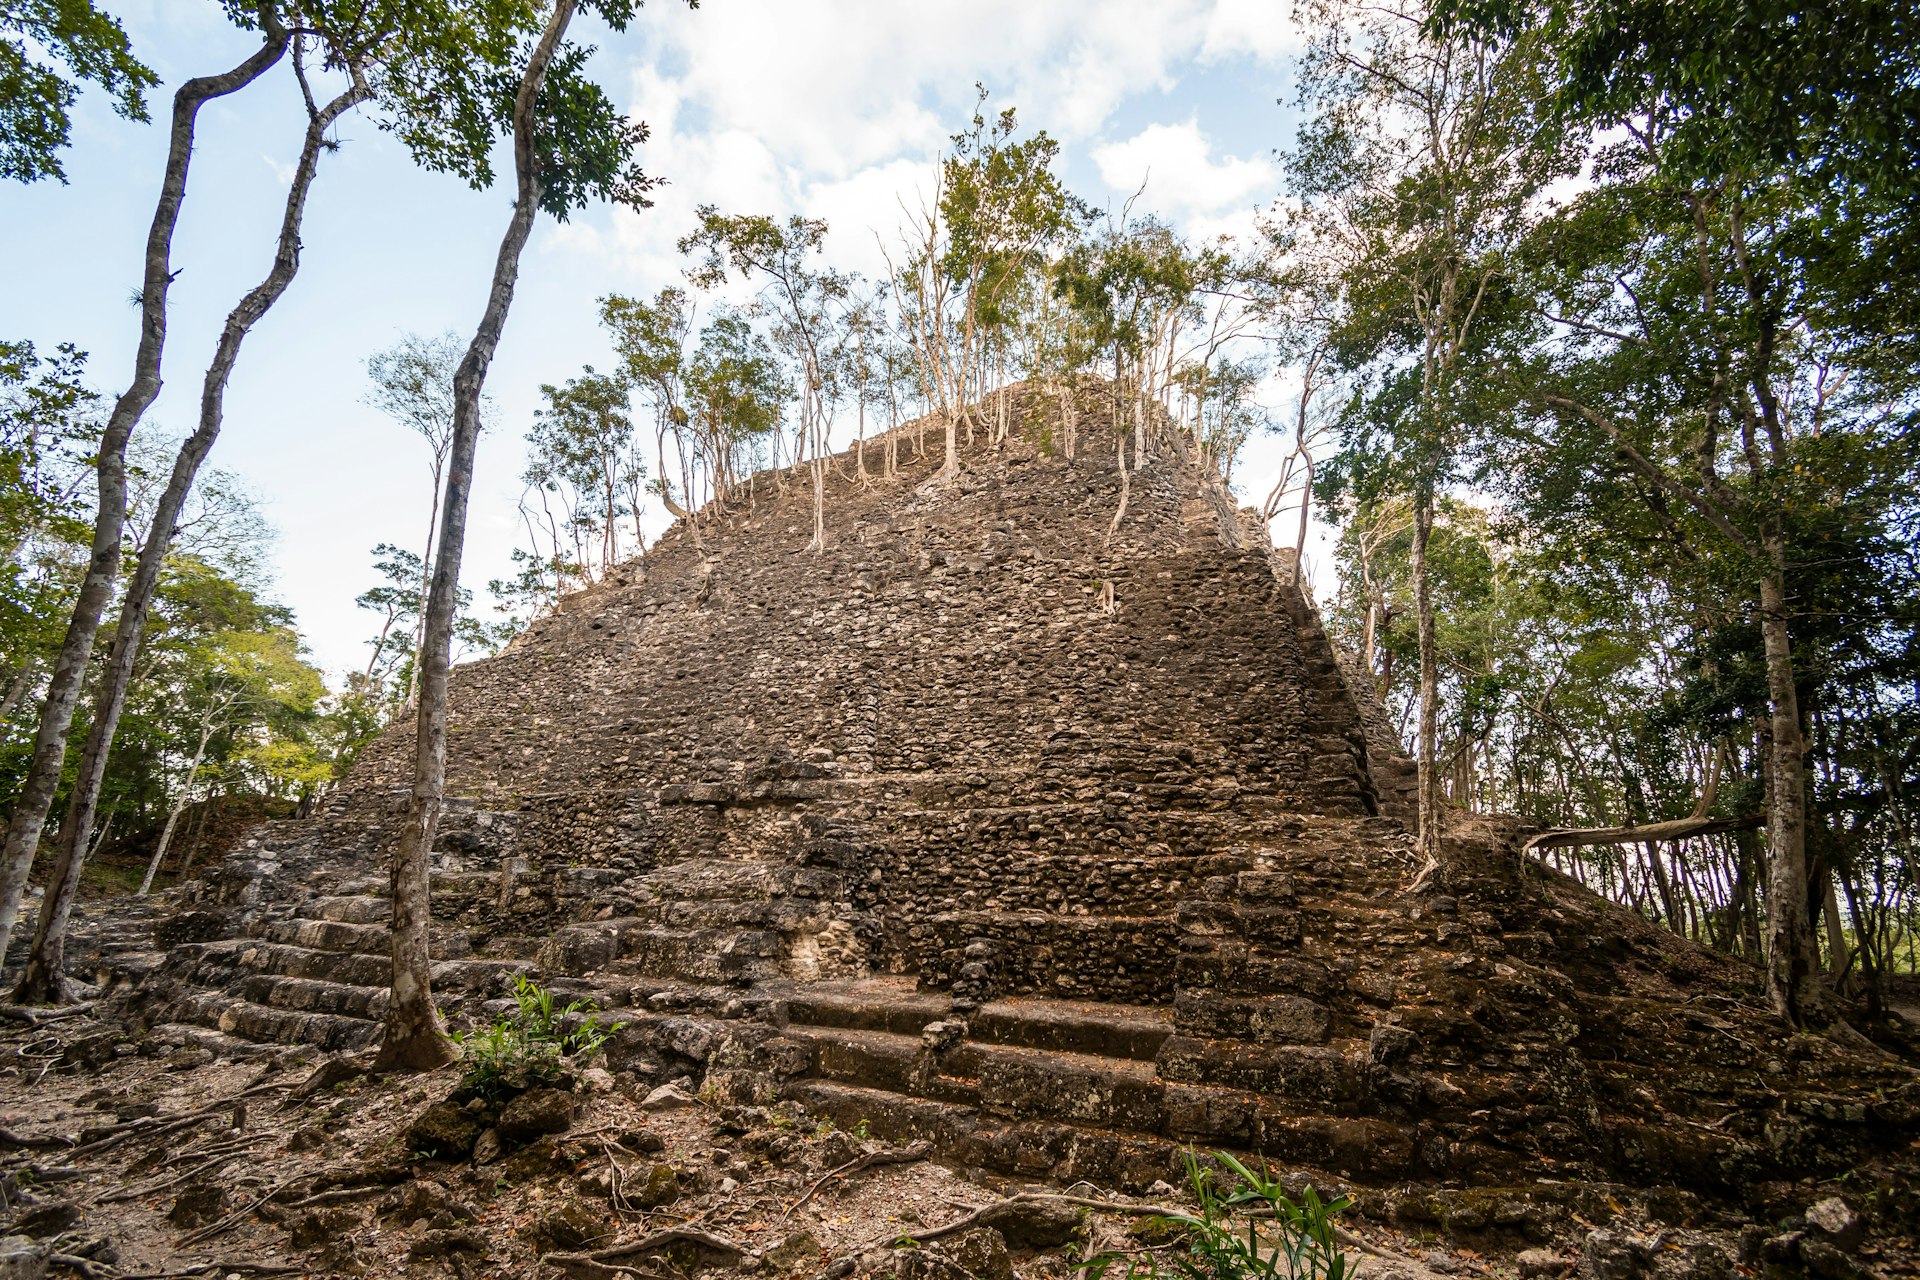 Ruins of an ancient maya pyramid (La Danta) deep in the Guatamalan jungle